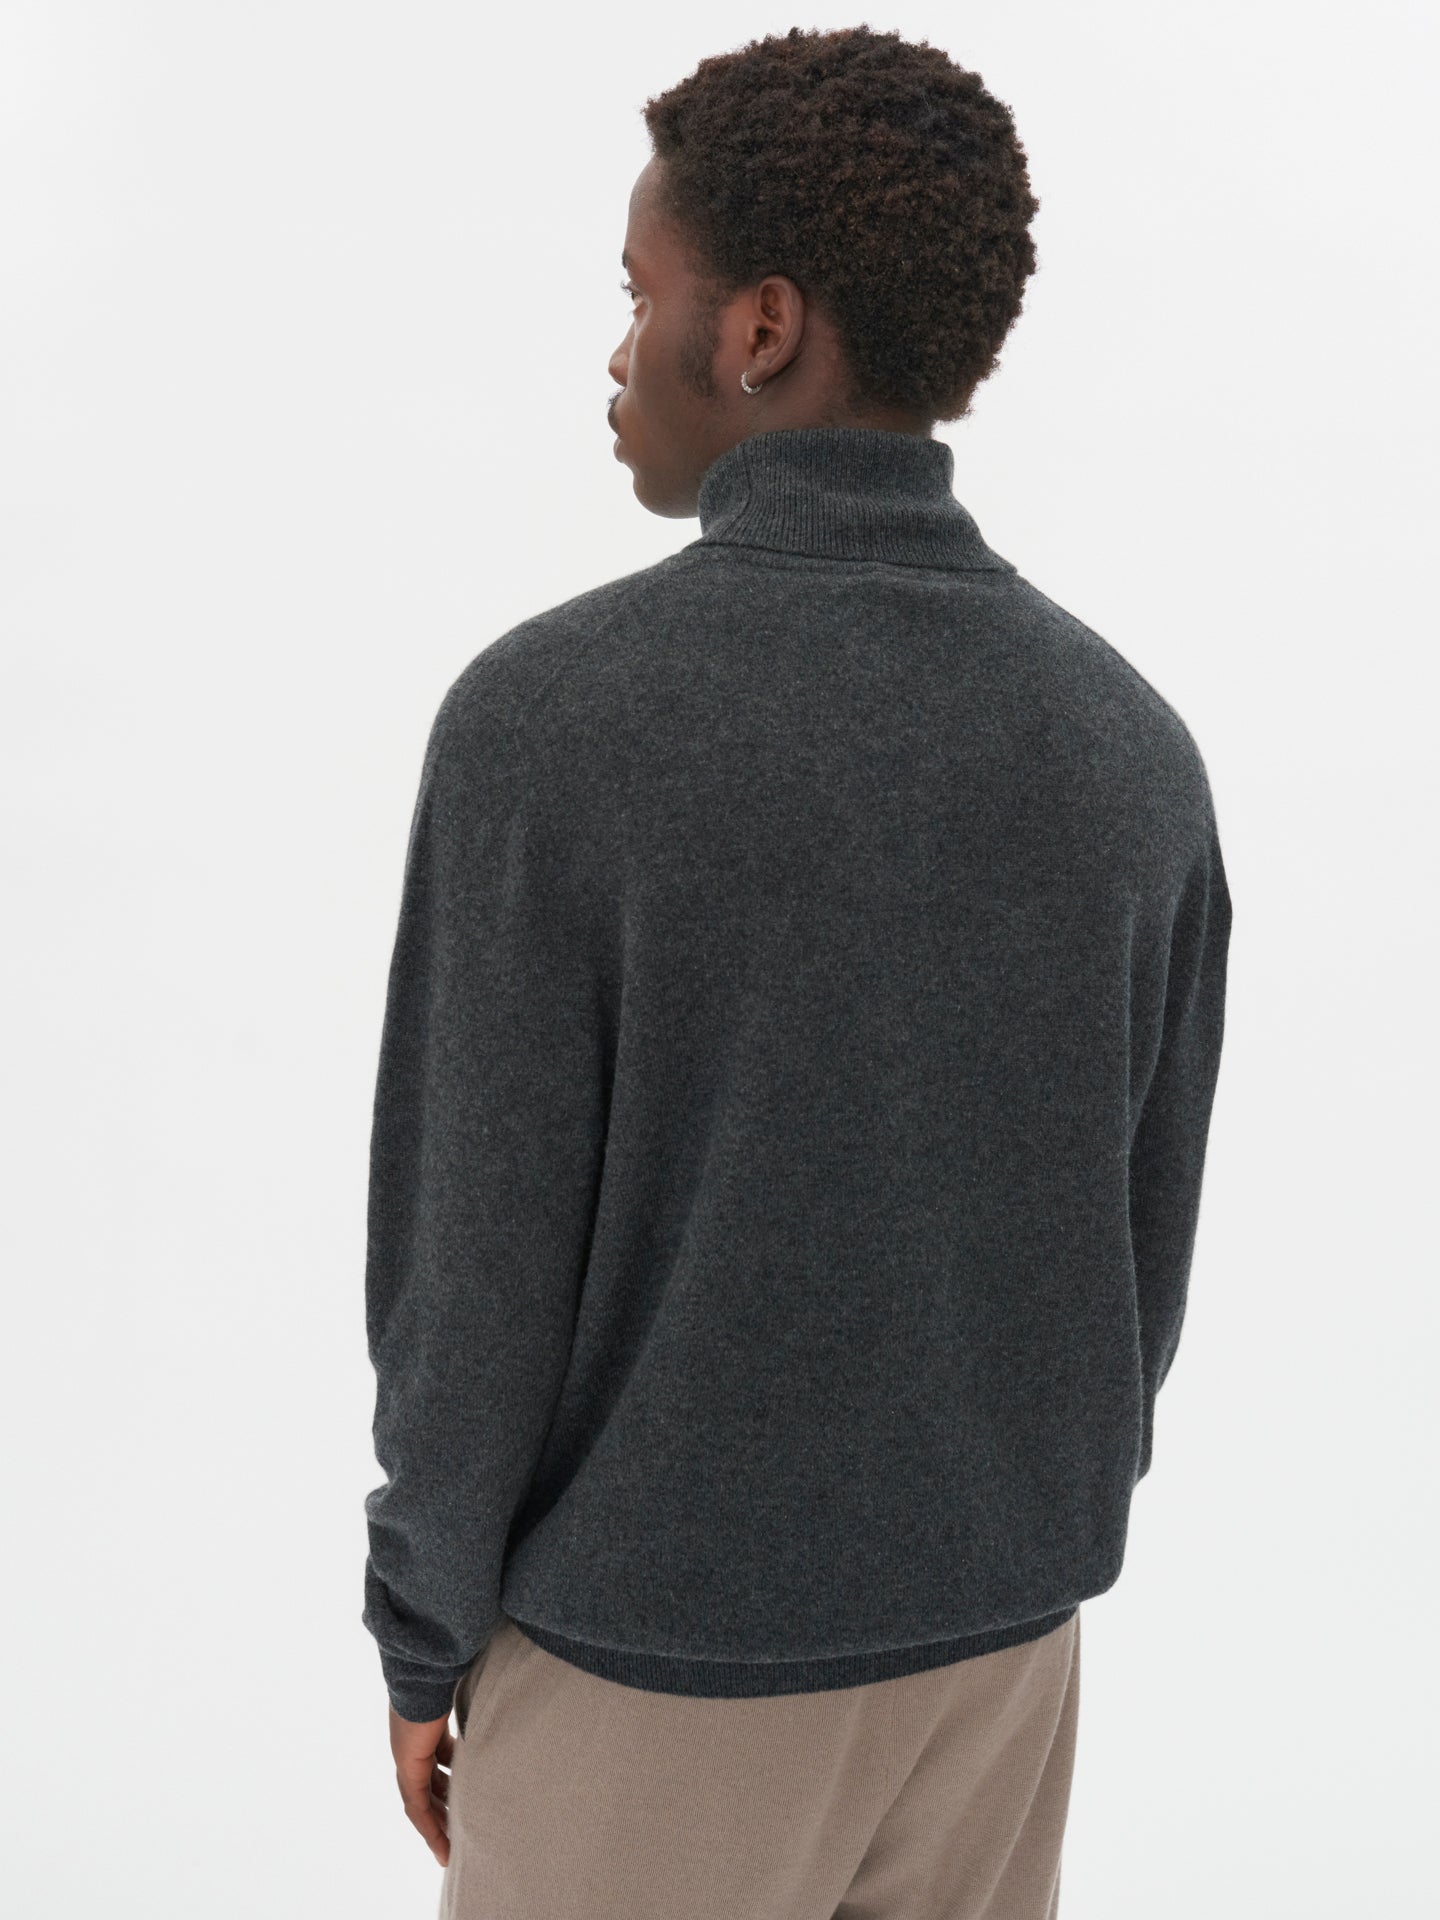 Men's Cashmere Basic Turtleneck Sweater Charcaol - Gobi Cashmere